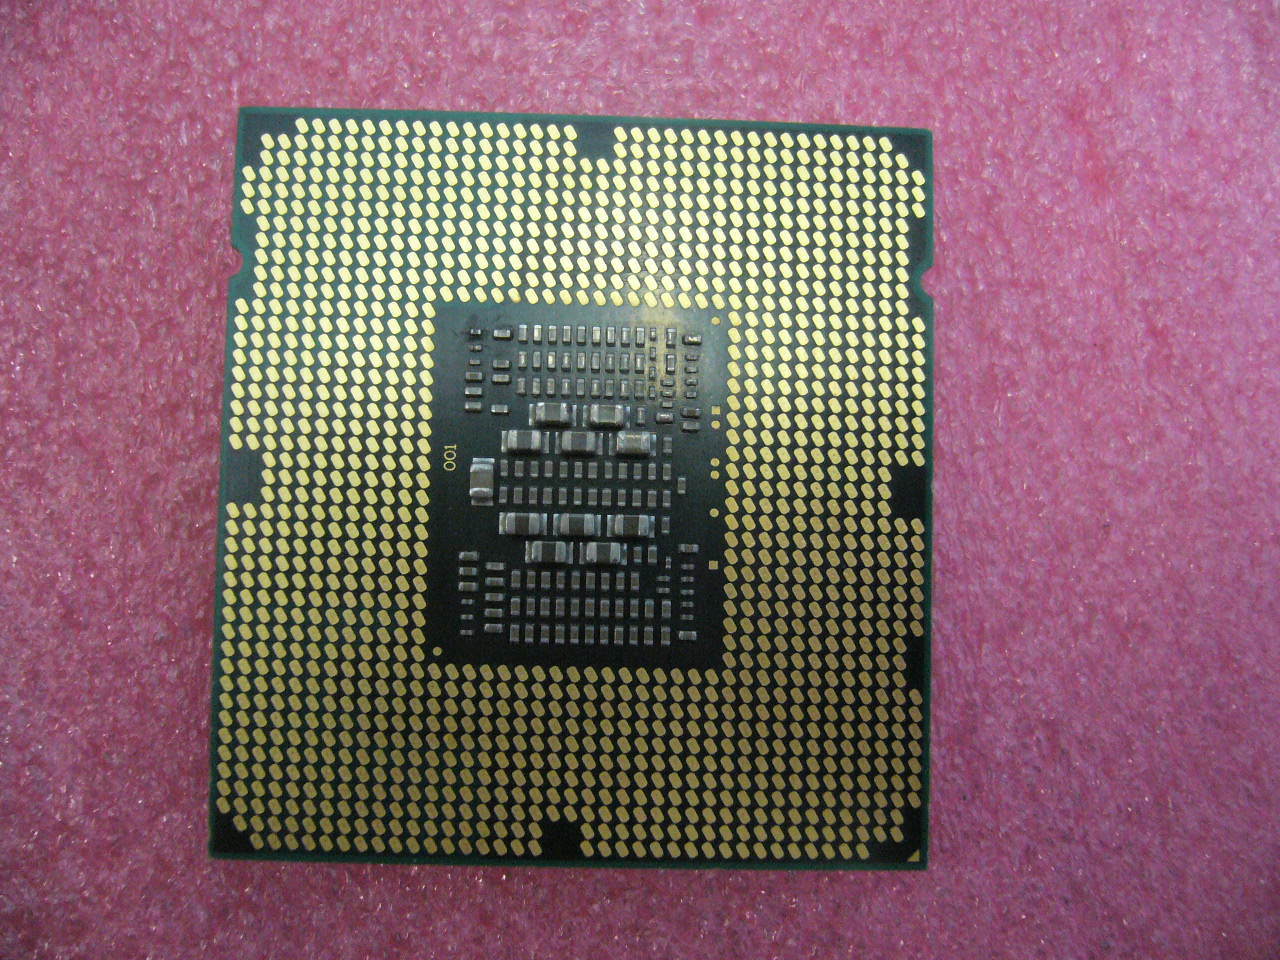 QTY 1x Intel CPU E5-2403 CPU Quad-Cores 1.8Ghz LGA1356 SR0LS - Click Image to Close